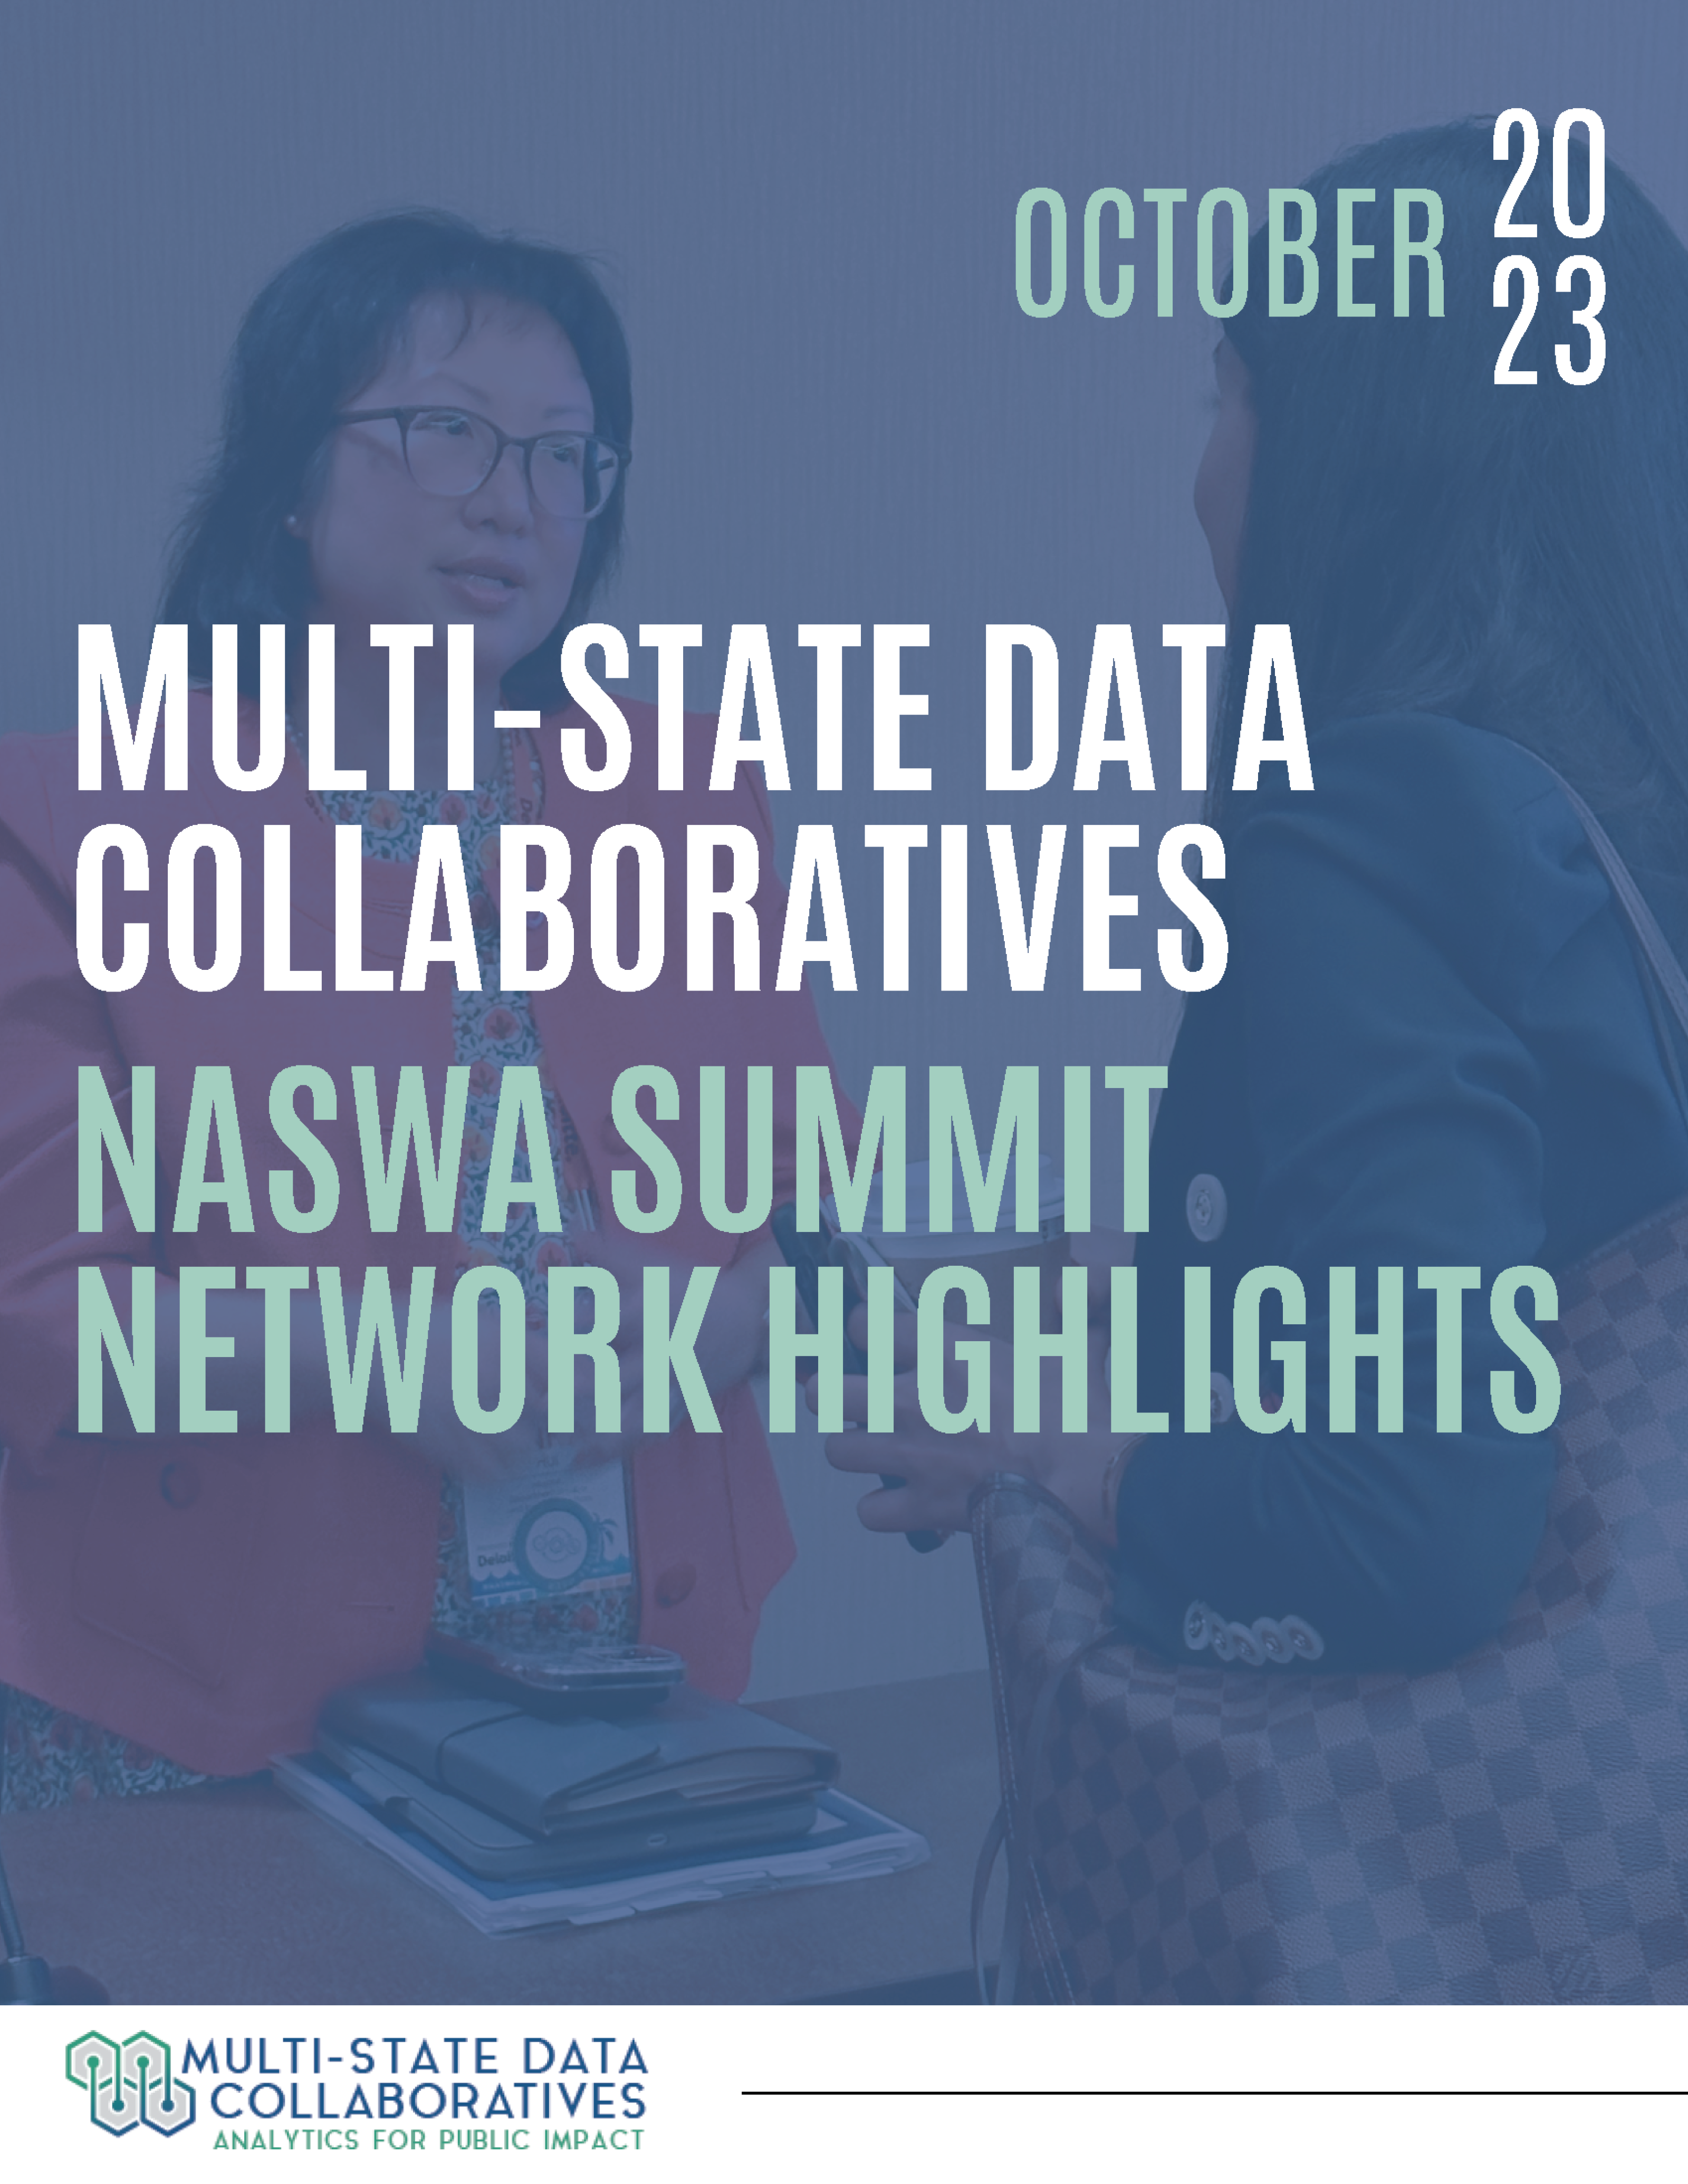 MSDC NASWA SUMMIT Network Highlights